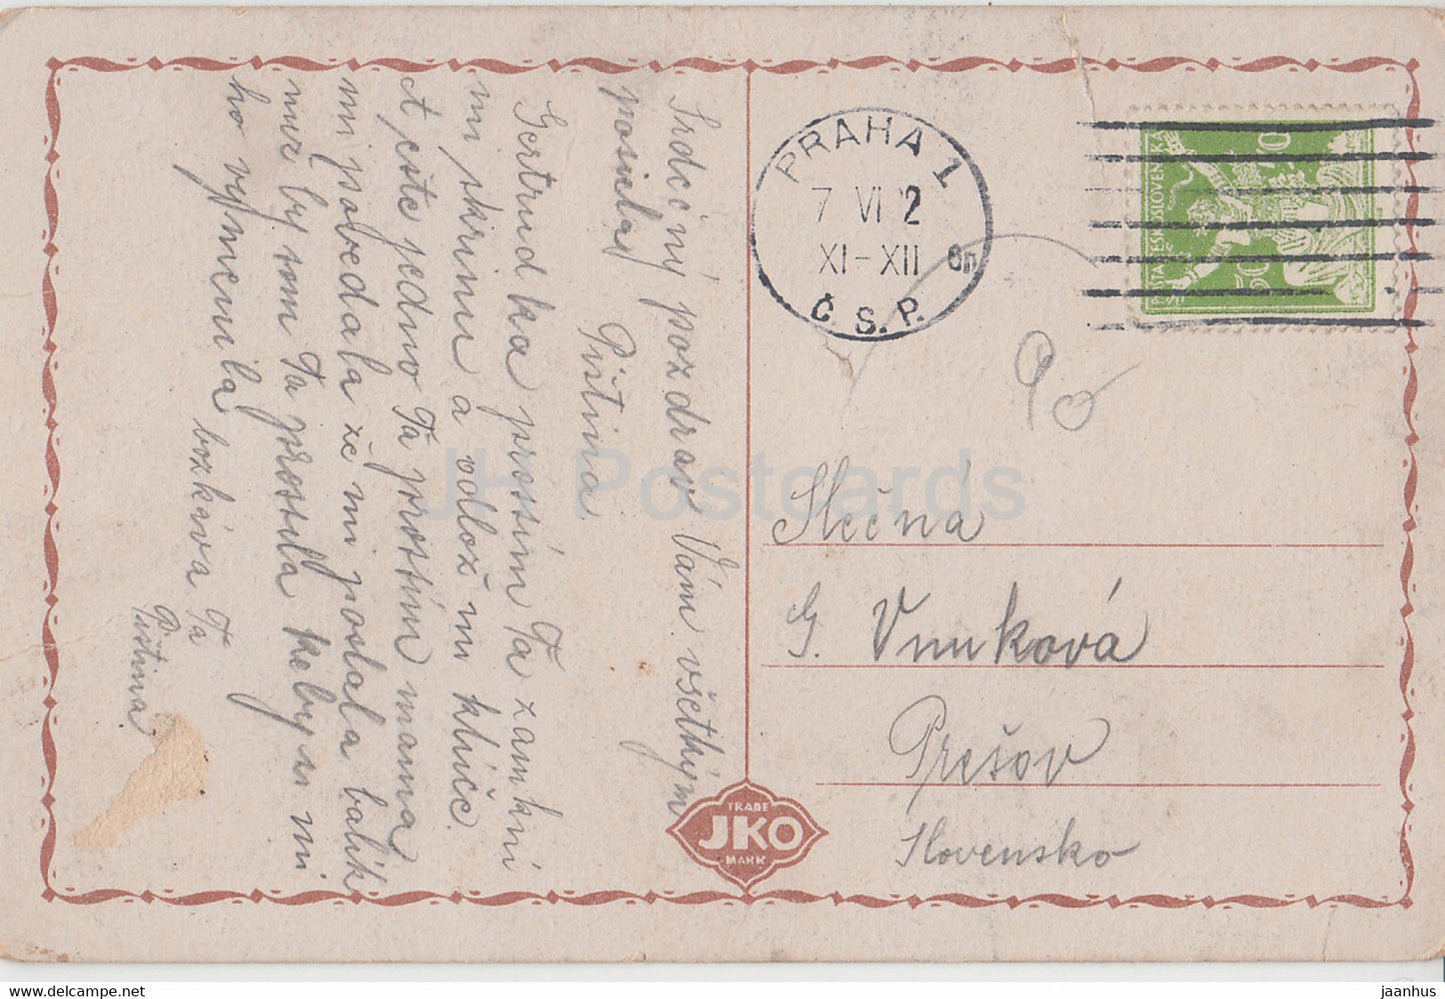 Bohumin - Oderberg - tram - old postcard - Czech Republic - Czechoslovakia - used